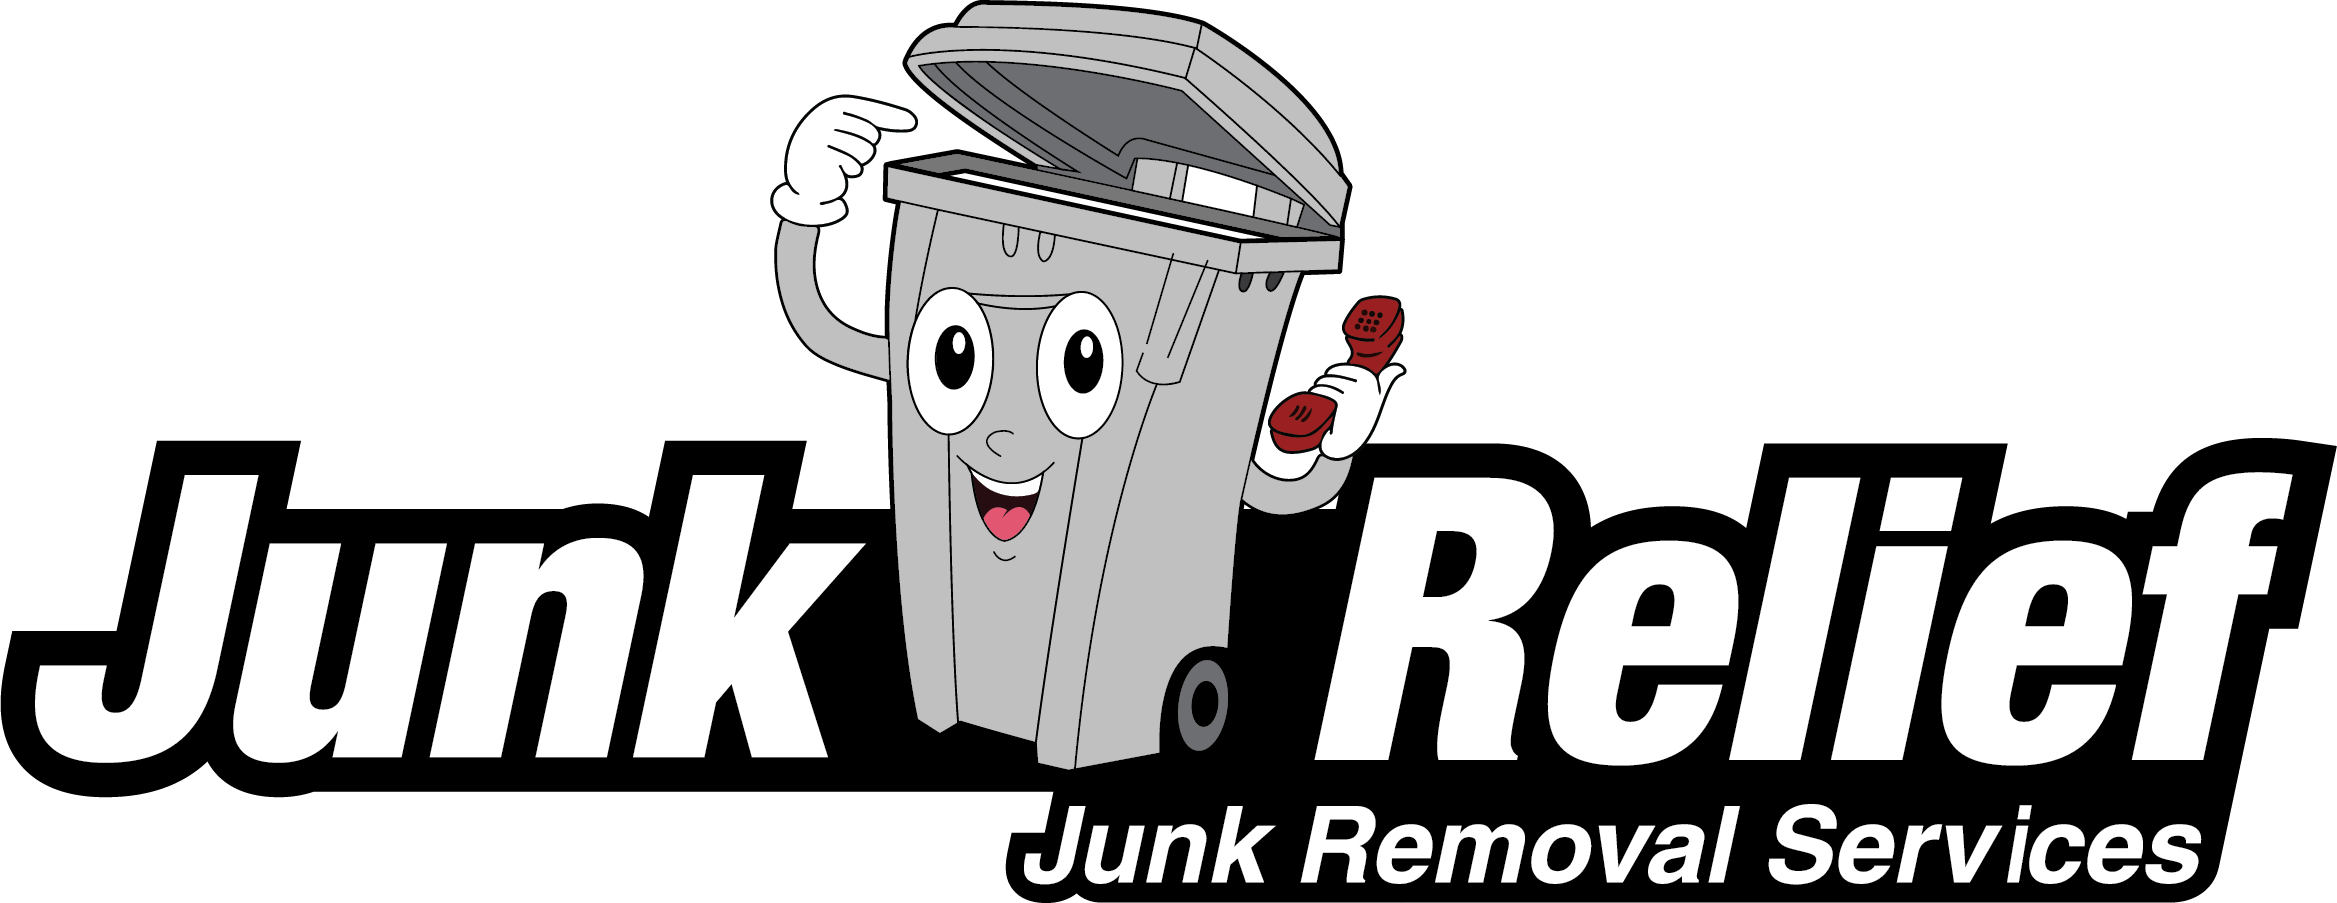 Junk relief logo